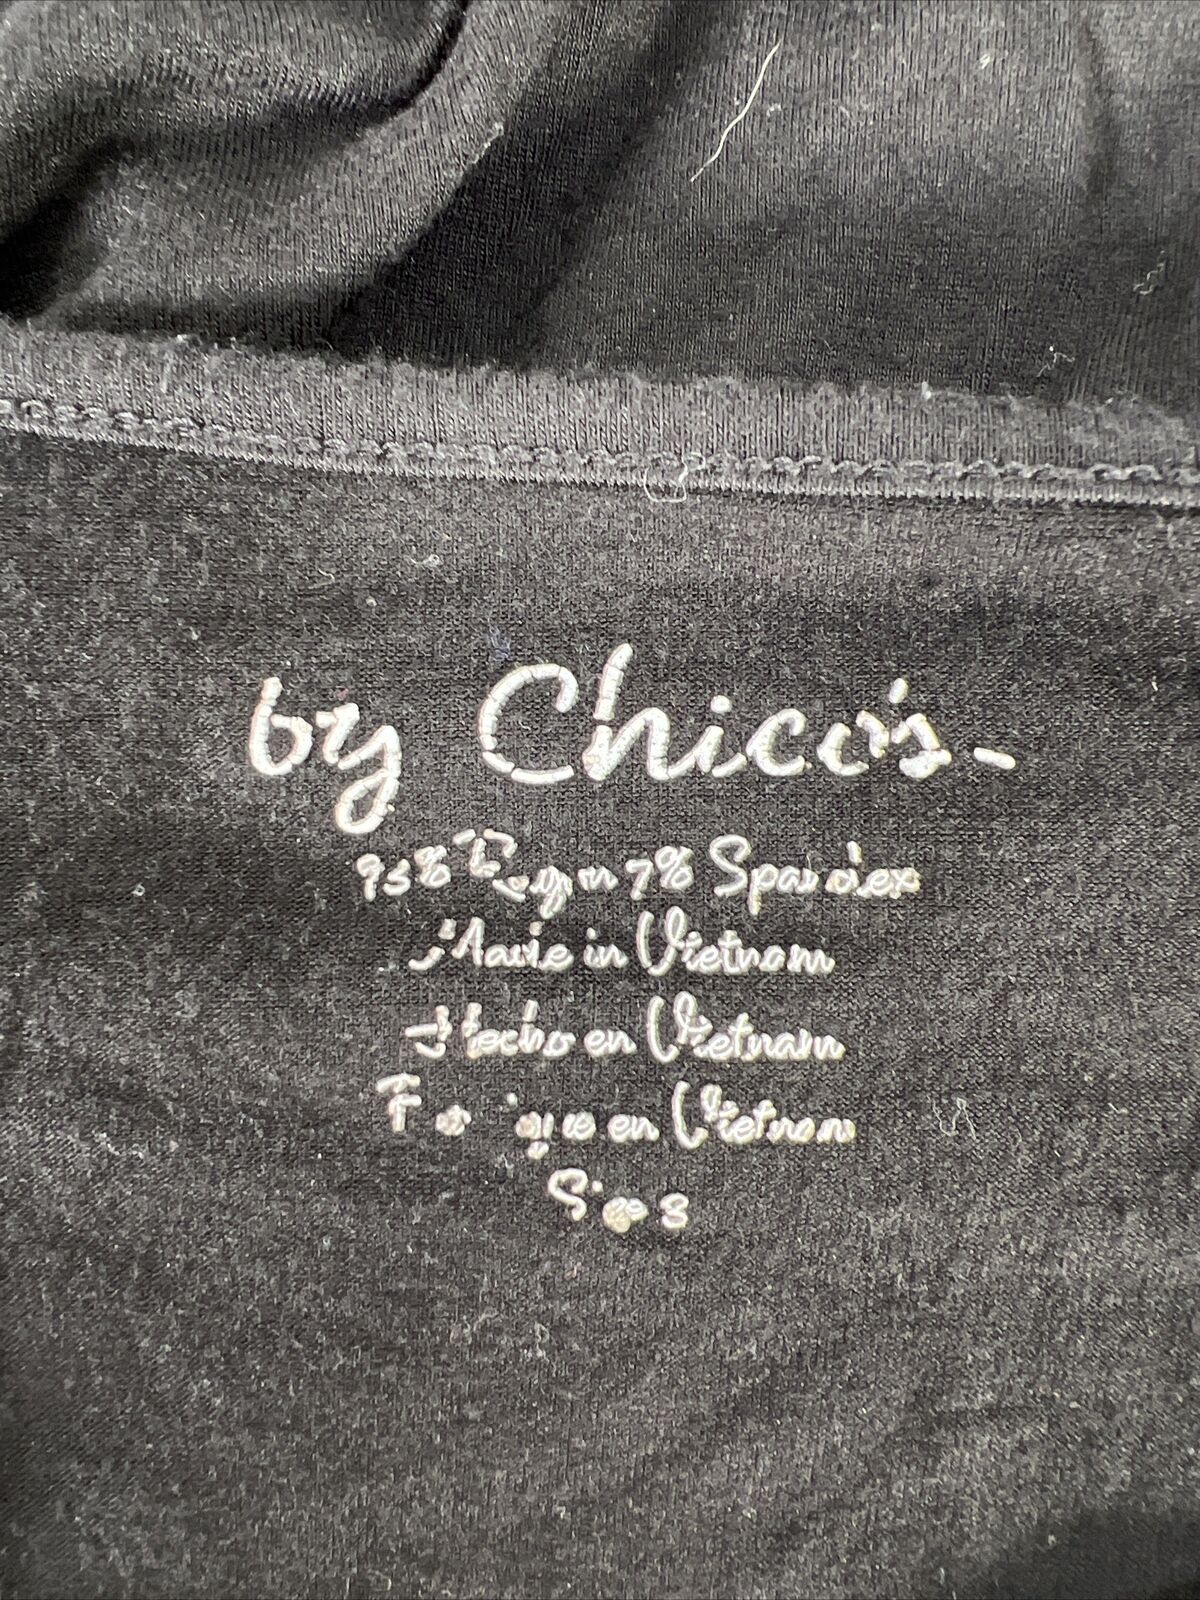 Chico's Women's Black 3/4 Sleeve Stretch T-Shirt - 3/US XL